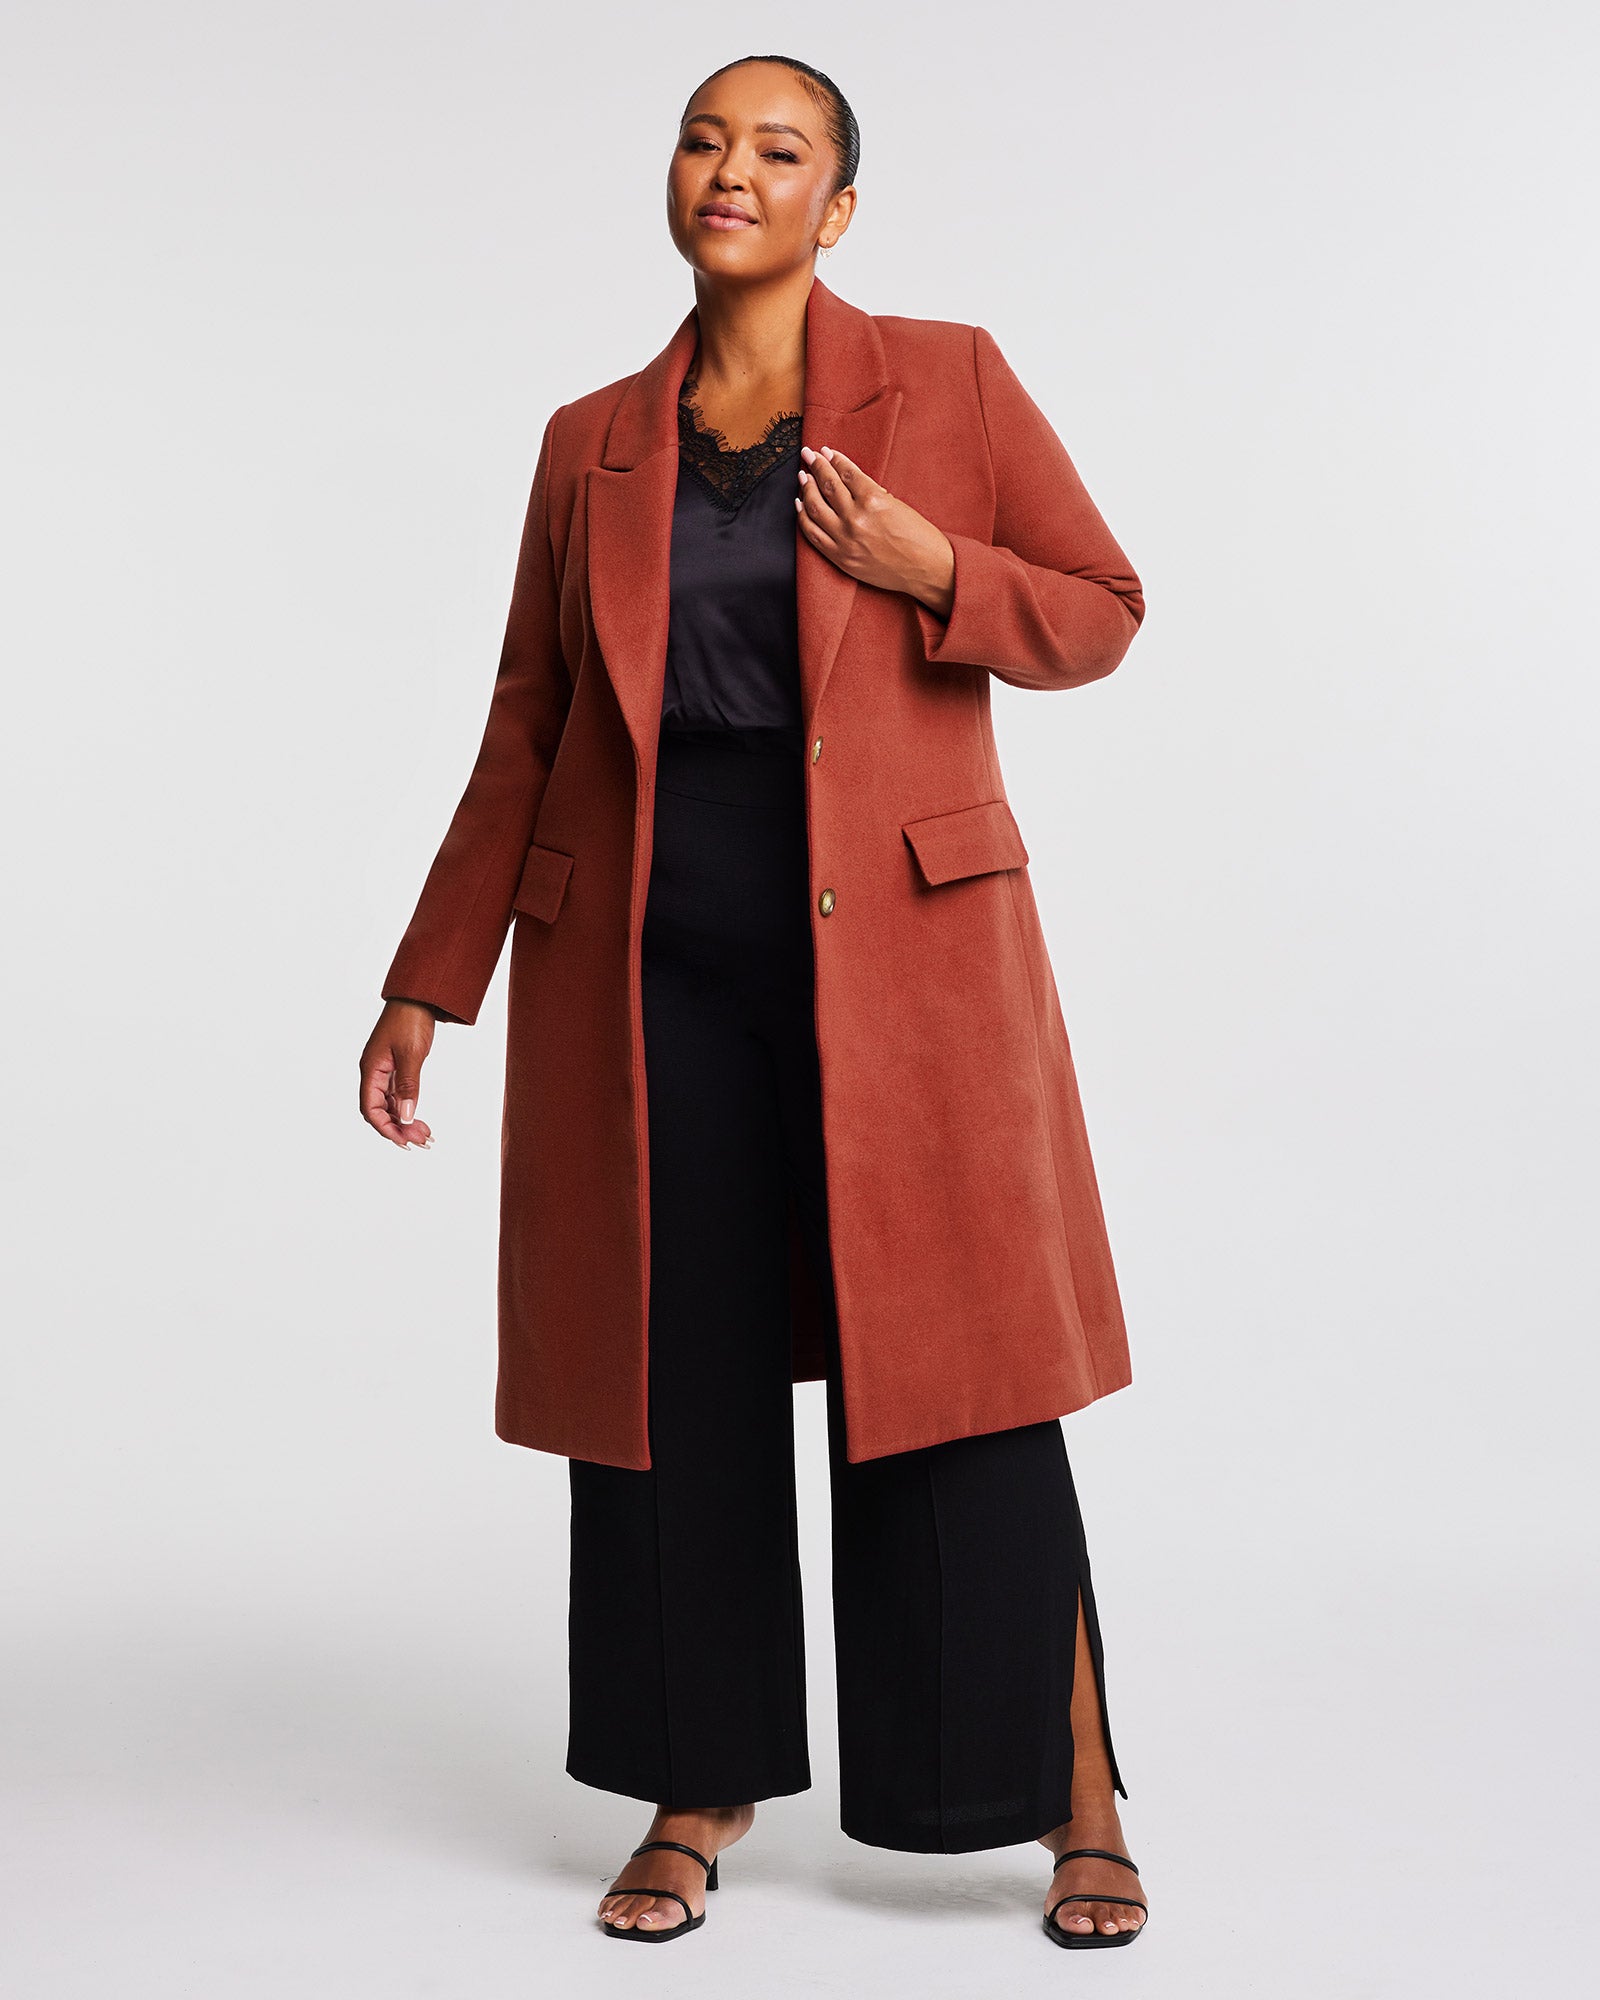 A plus-sized woman wearing a Mia Rust Full-Length Coat.